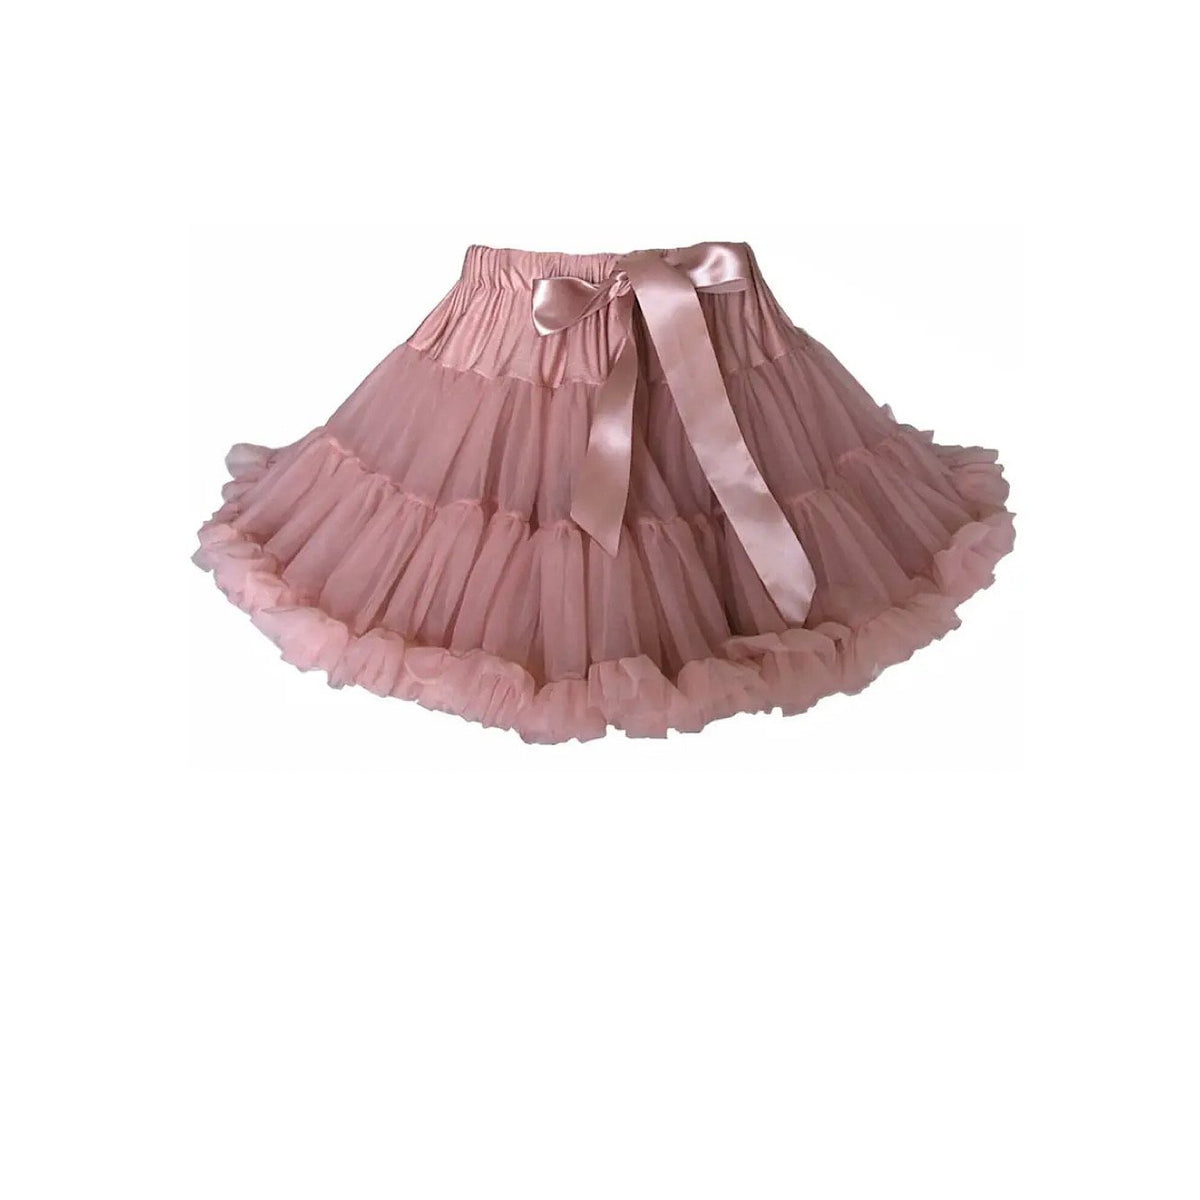 Vintage Pink Tutu Skirt